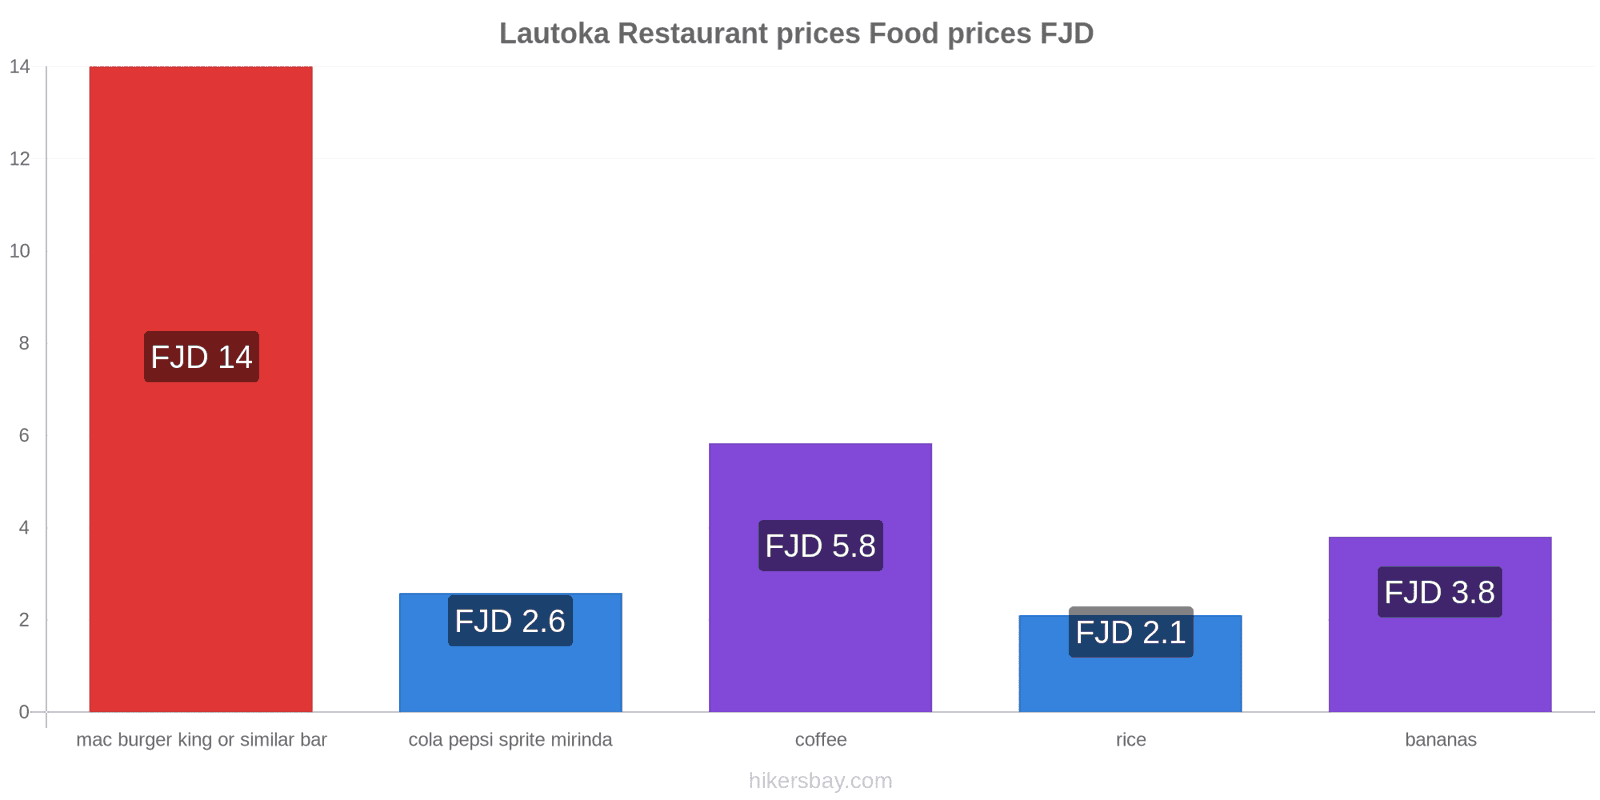 Lautoka price changes hikersbay.com